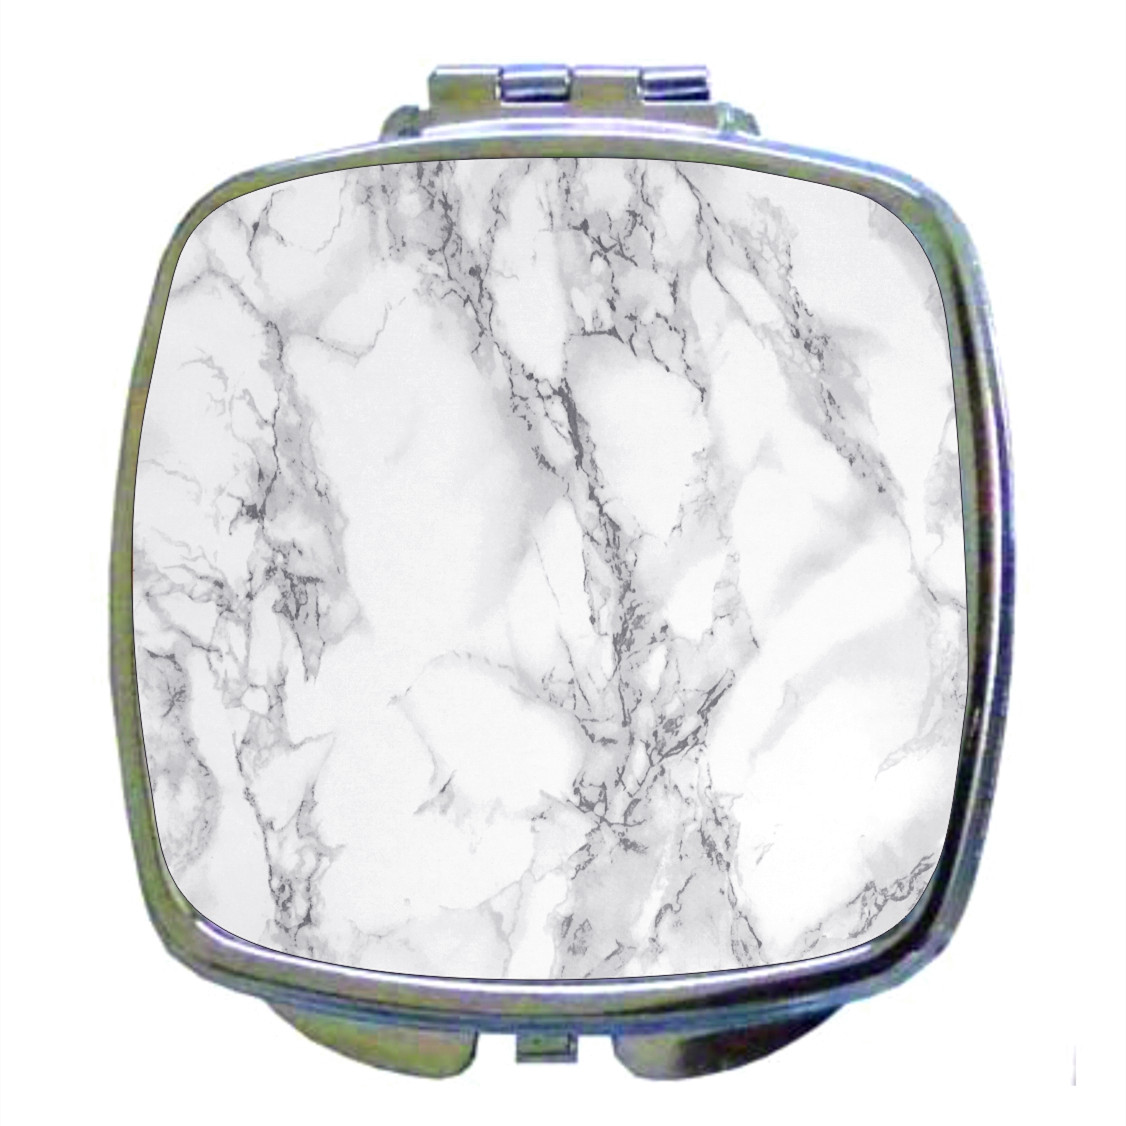 Artificial zebra design compact mirror with magnification for handbag